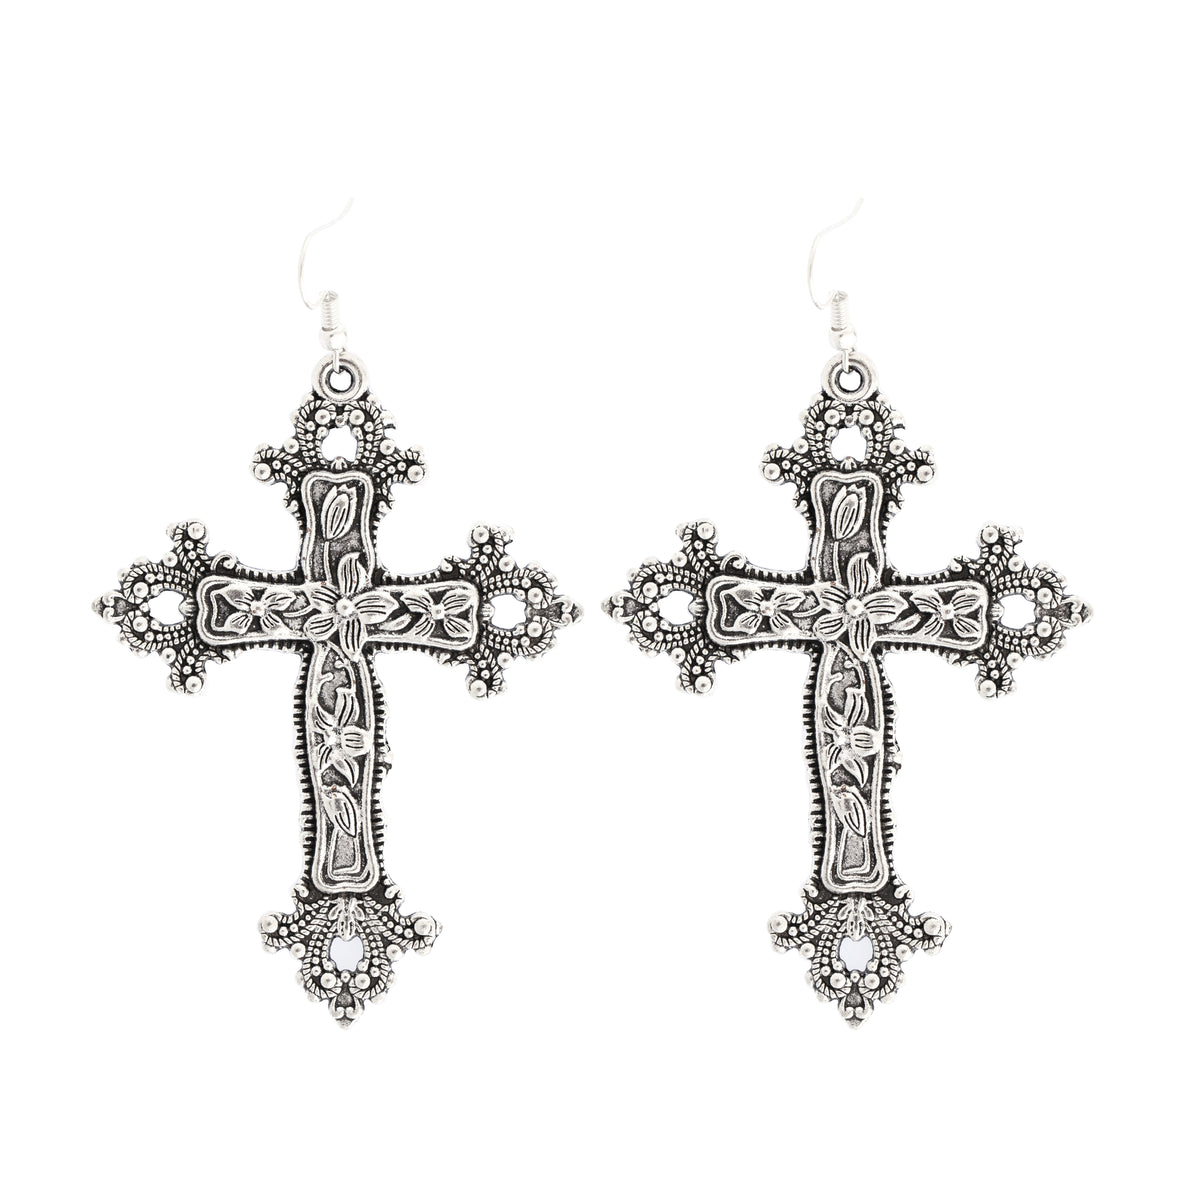 Cross earrings (pair) DB5443